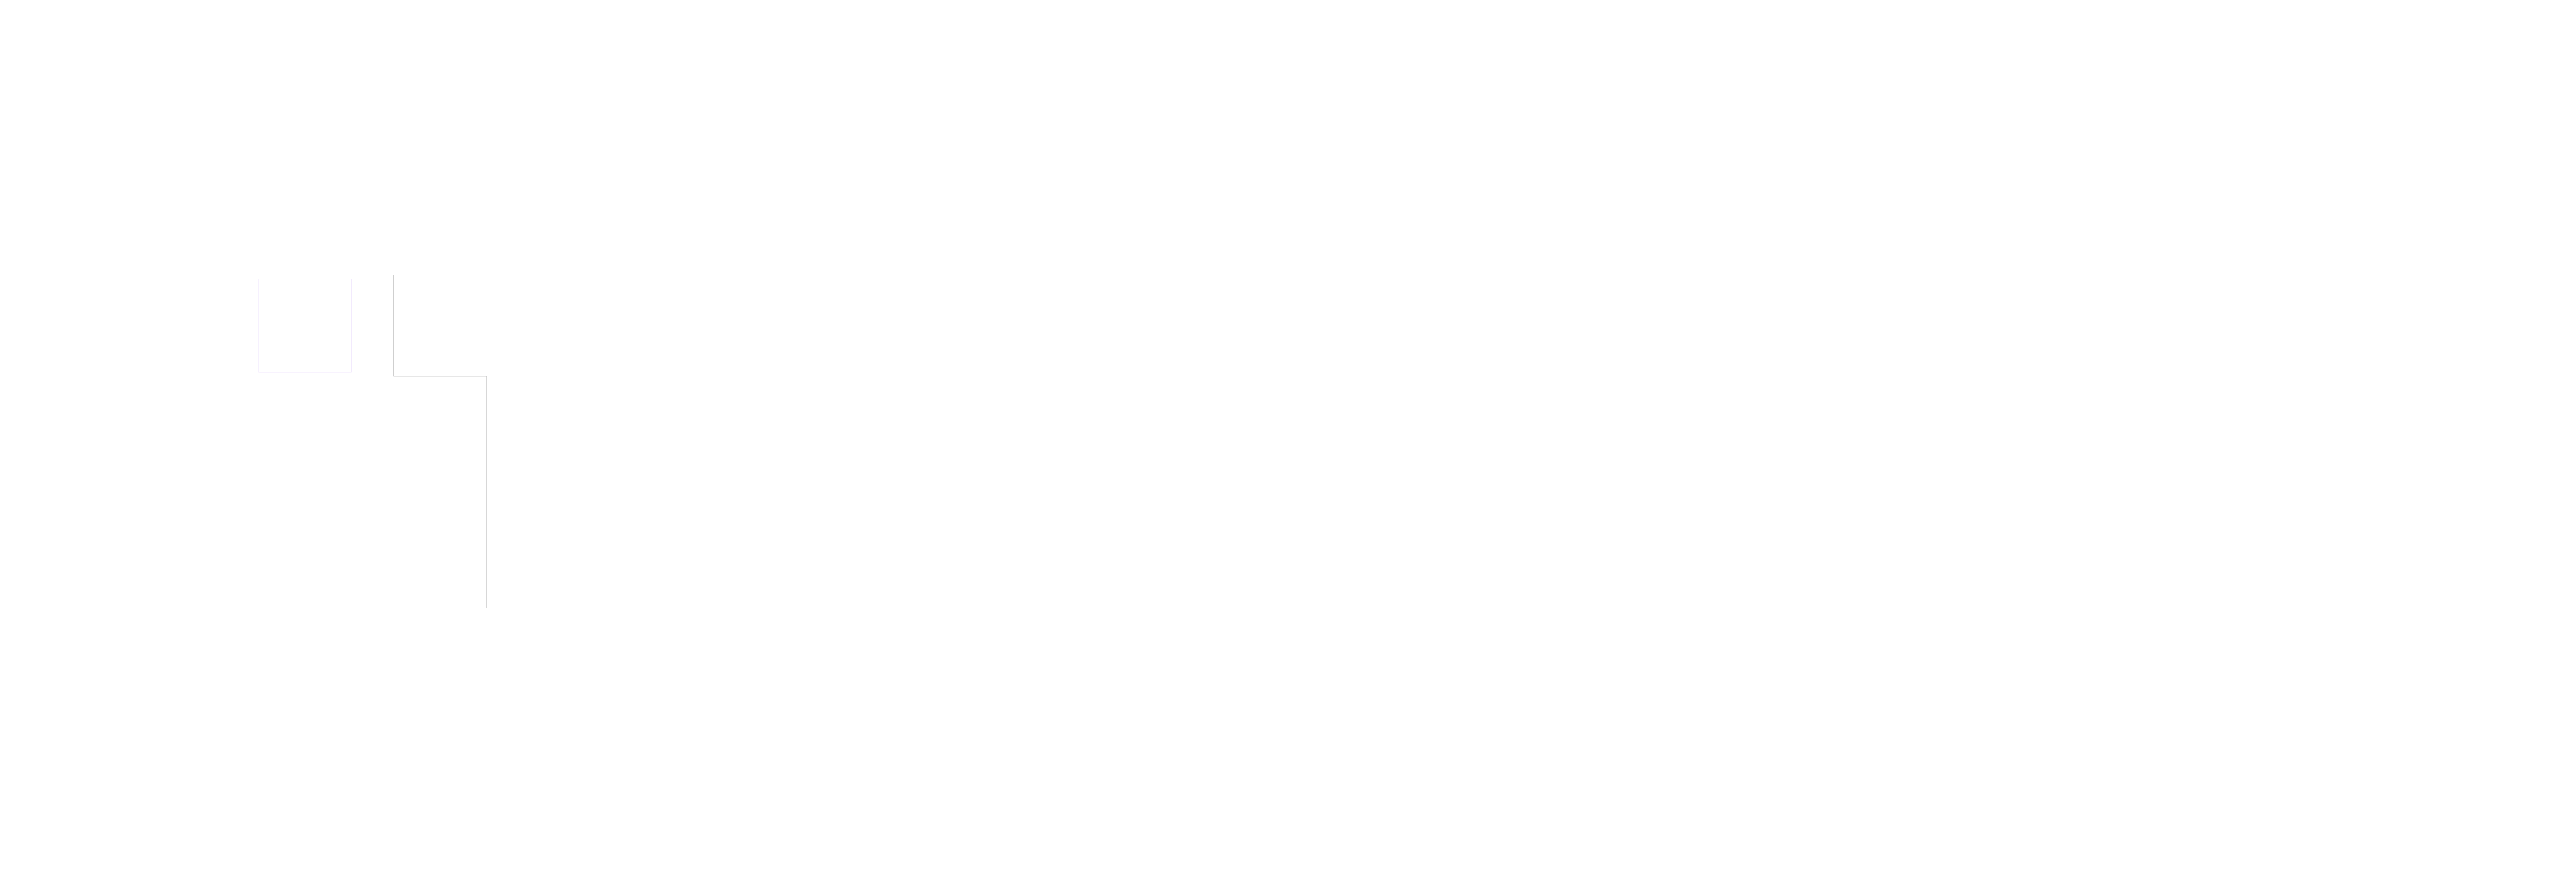 INIT Capital